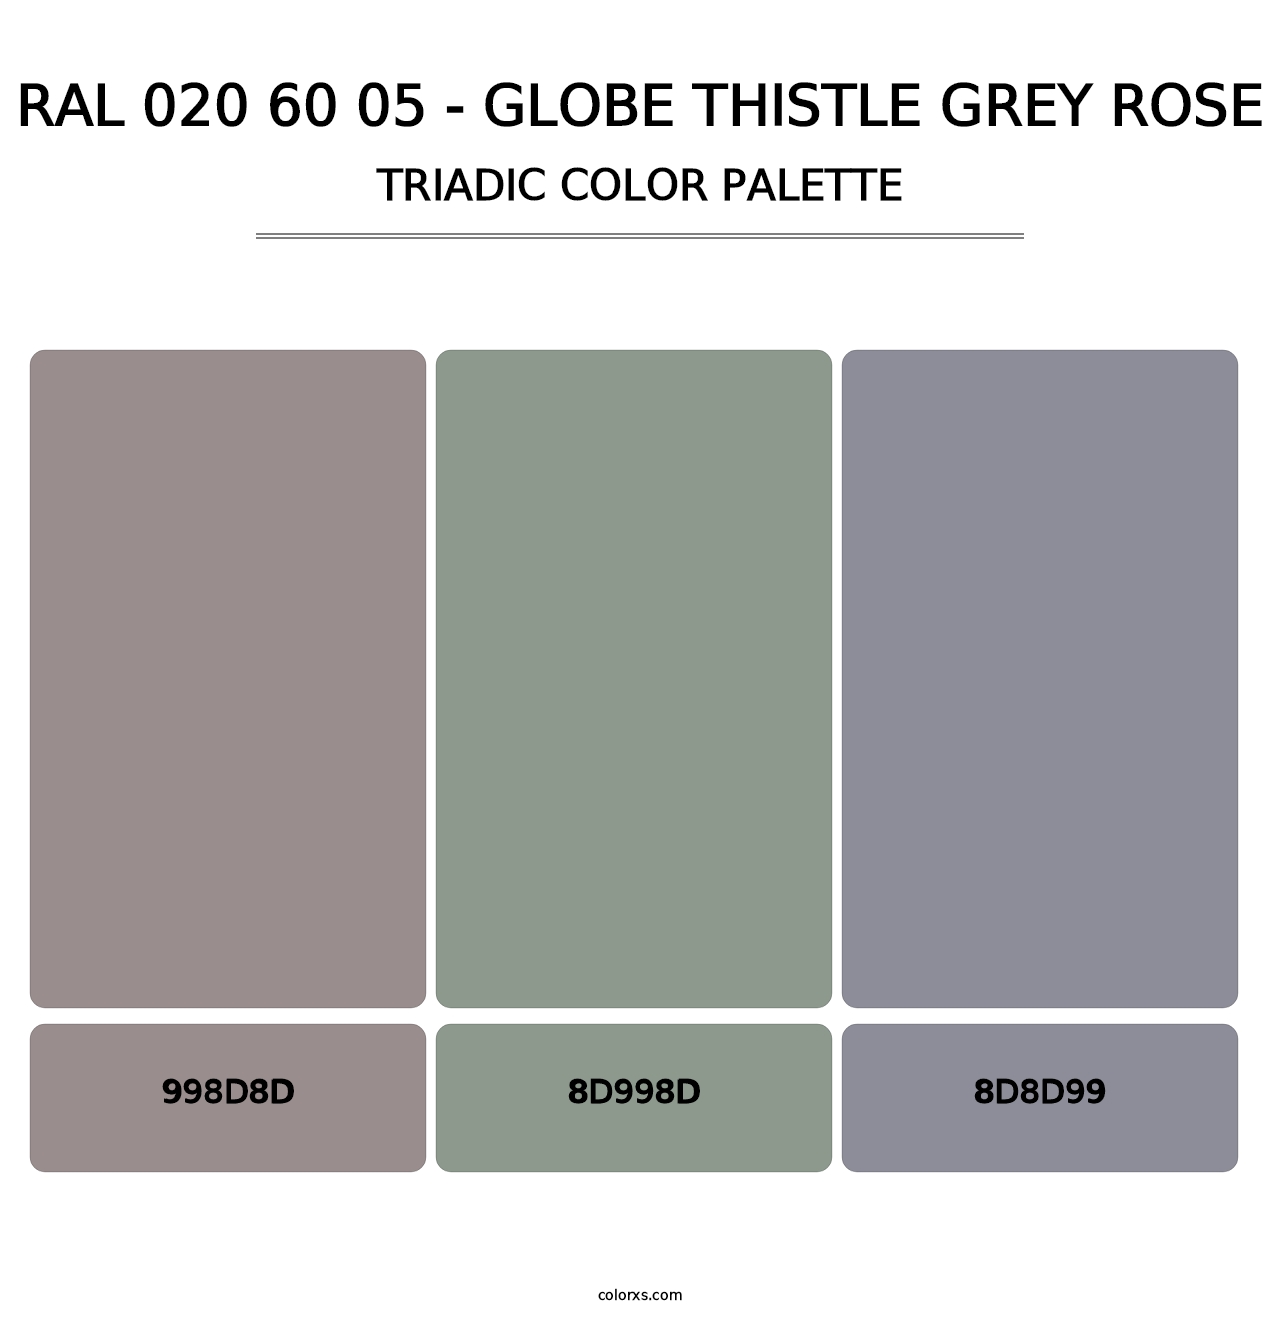 RAL 020 60 05 - Globe Thistle Grey Rose - Triadic Color Palette